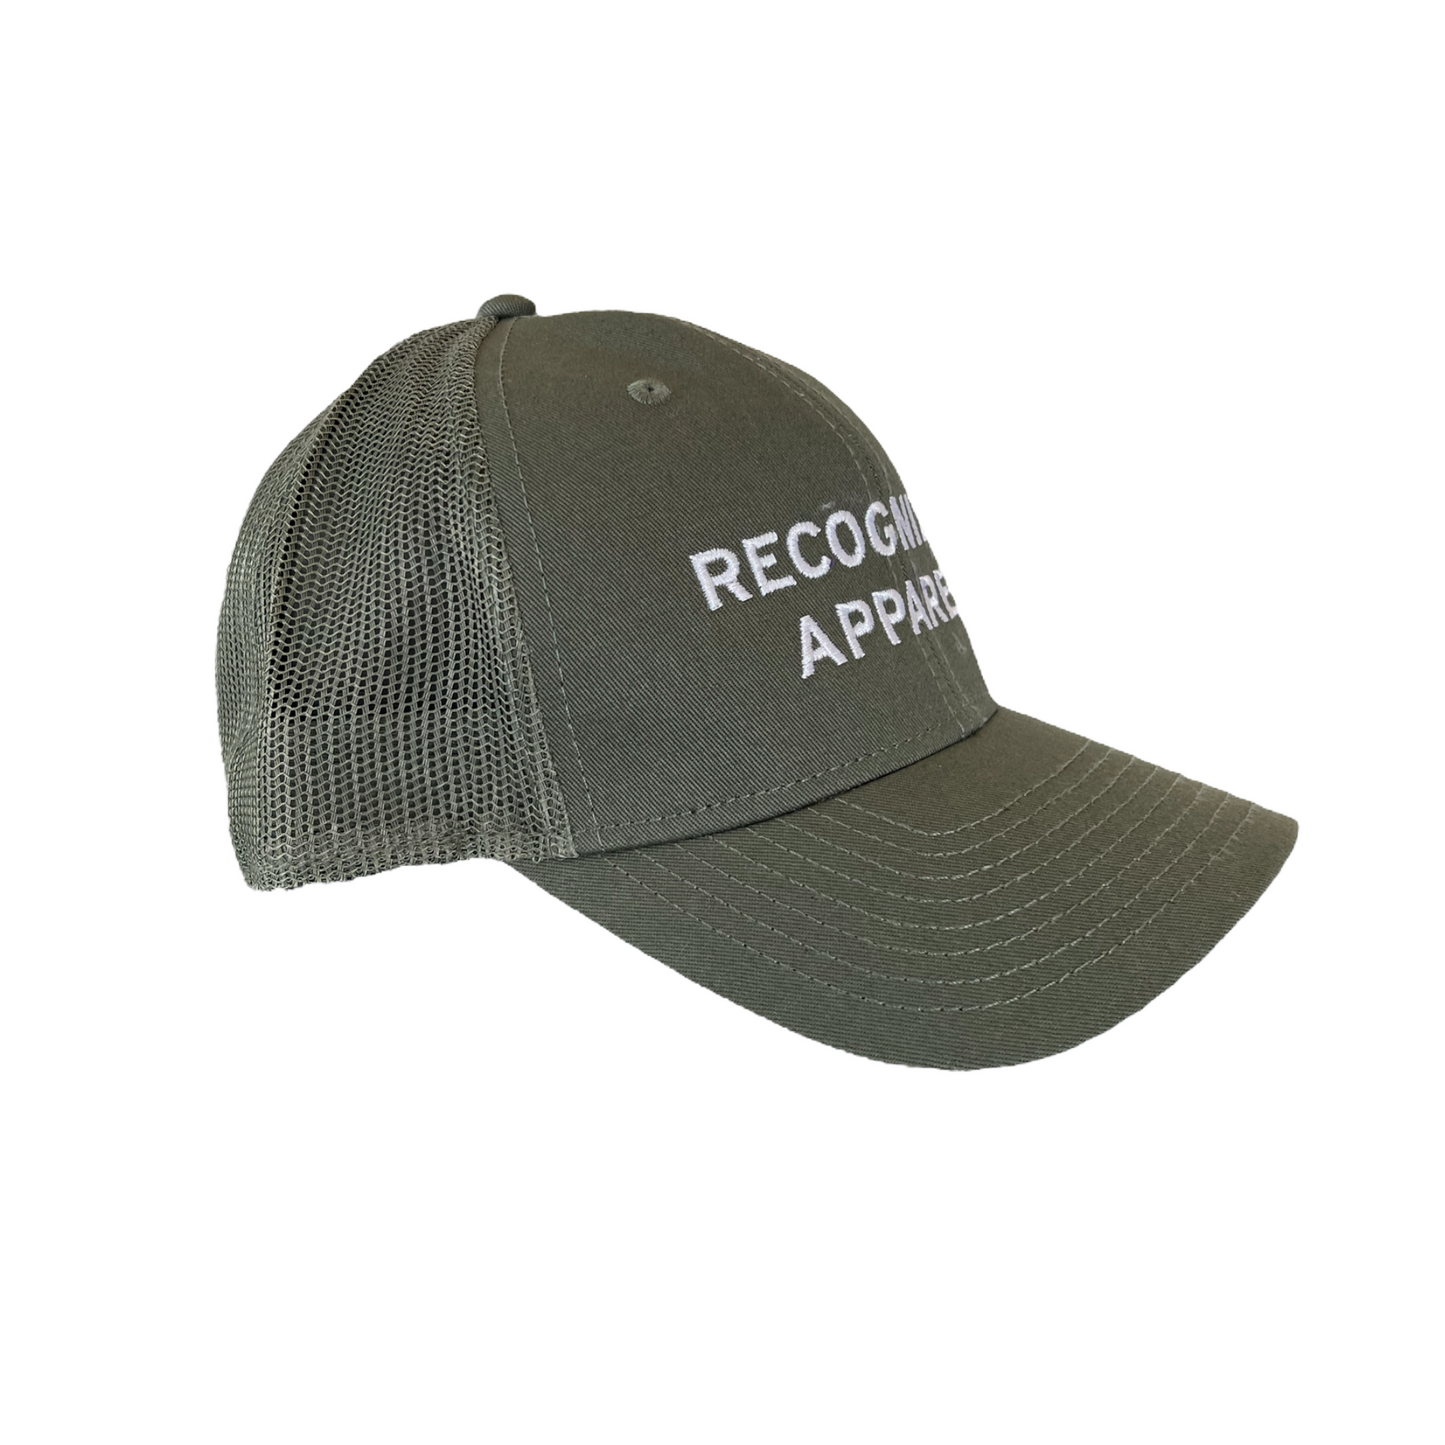 Recognized Apparel® Trucker Cap